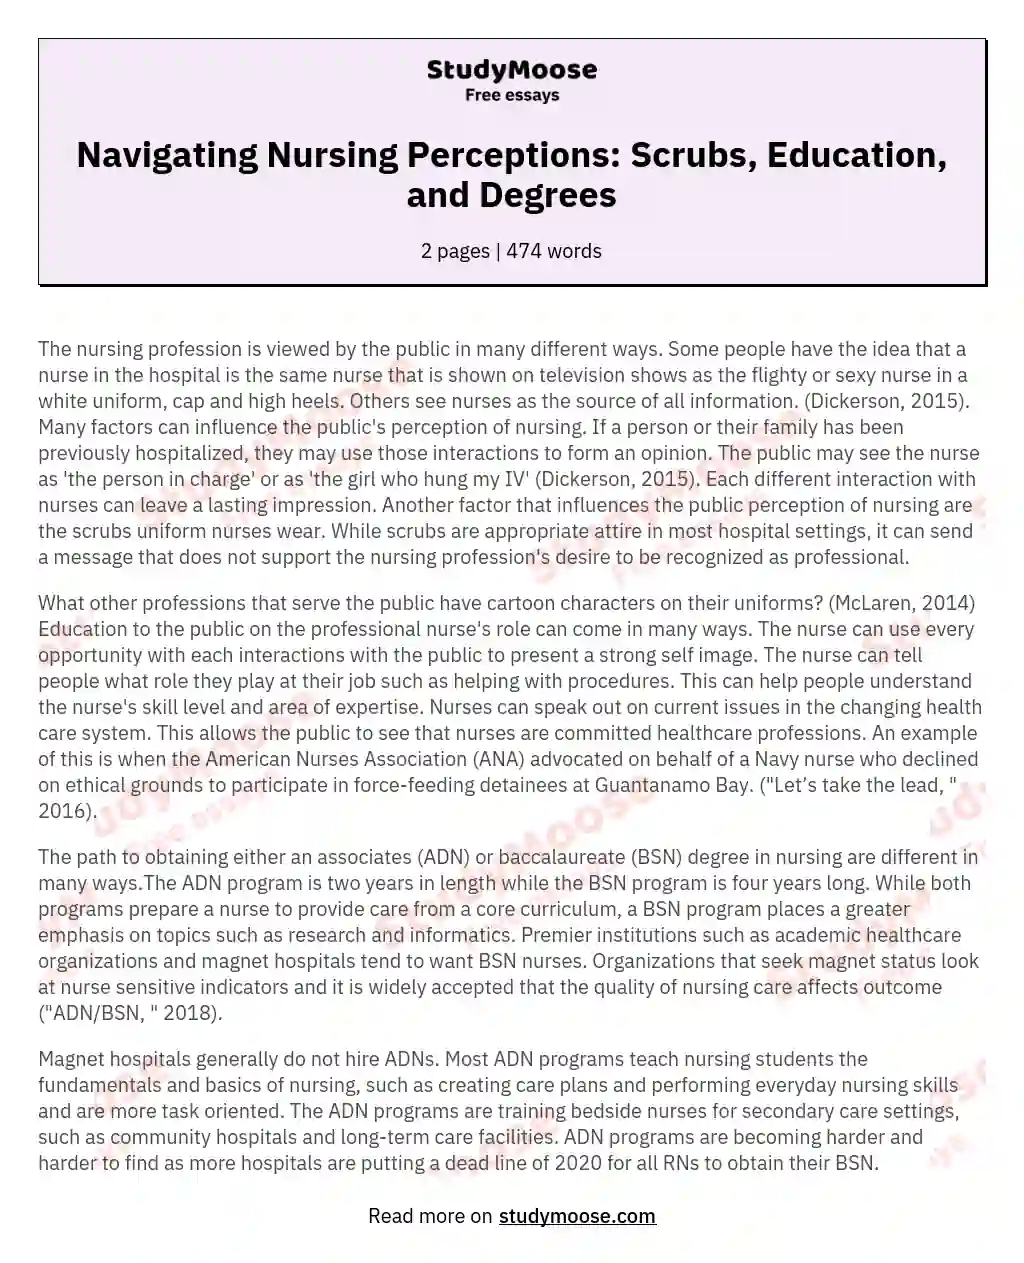 Navigating Nursing Perceptions: Scrubs, Education, and Degrees